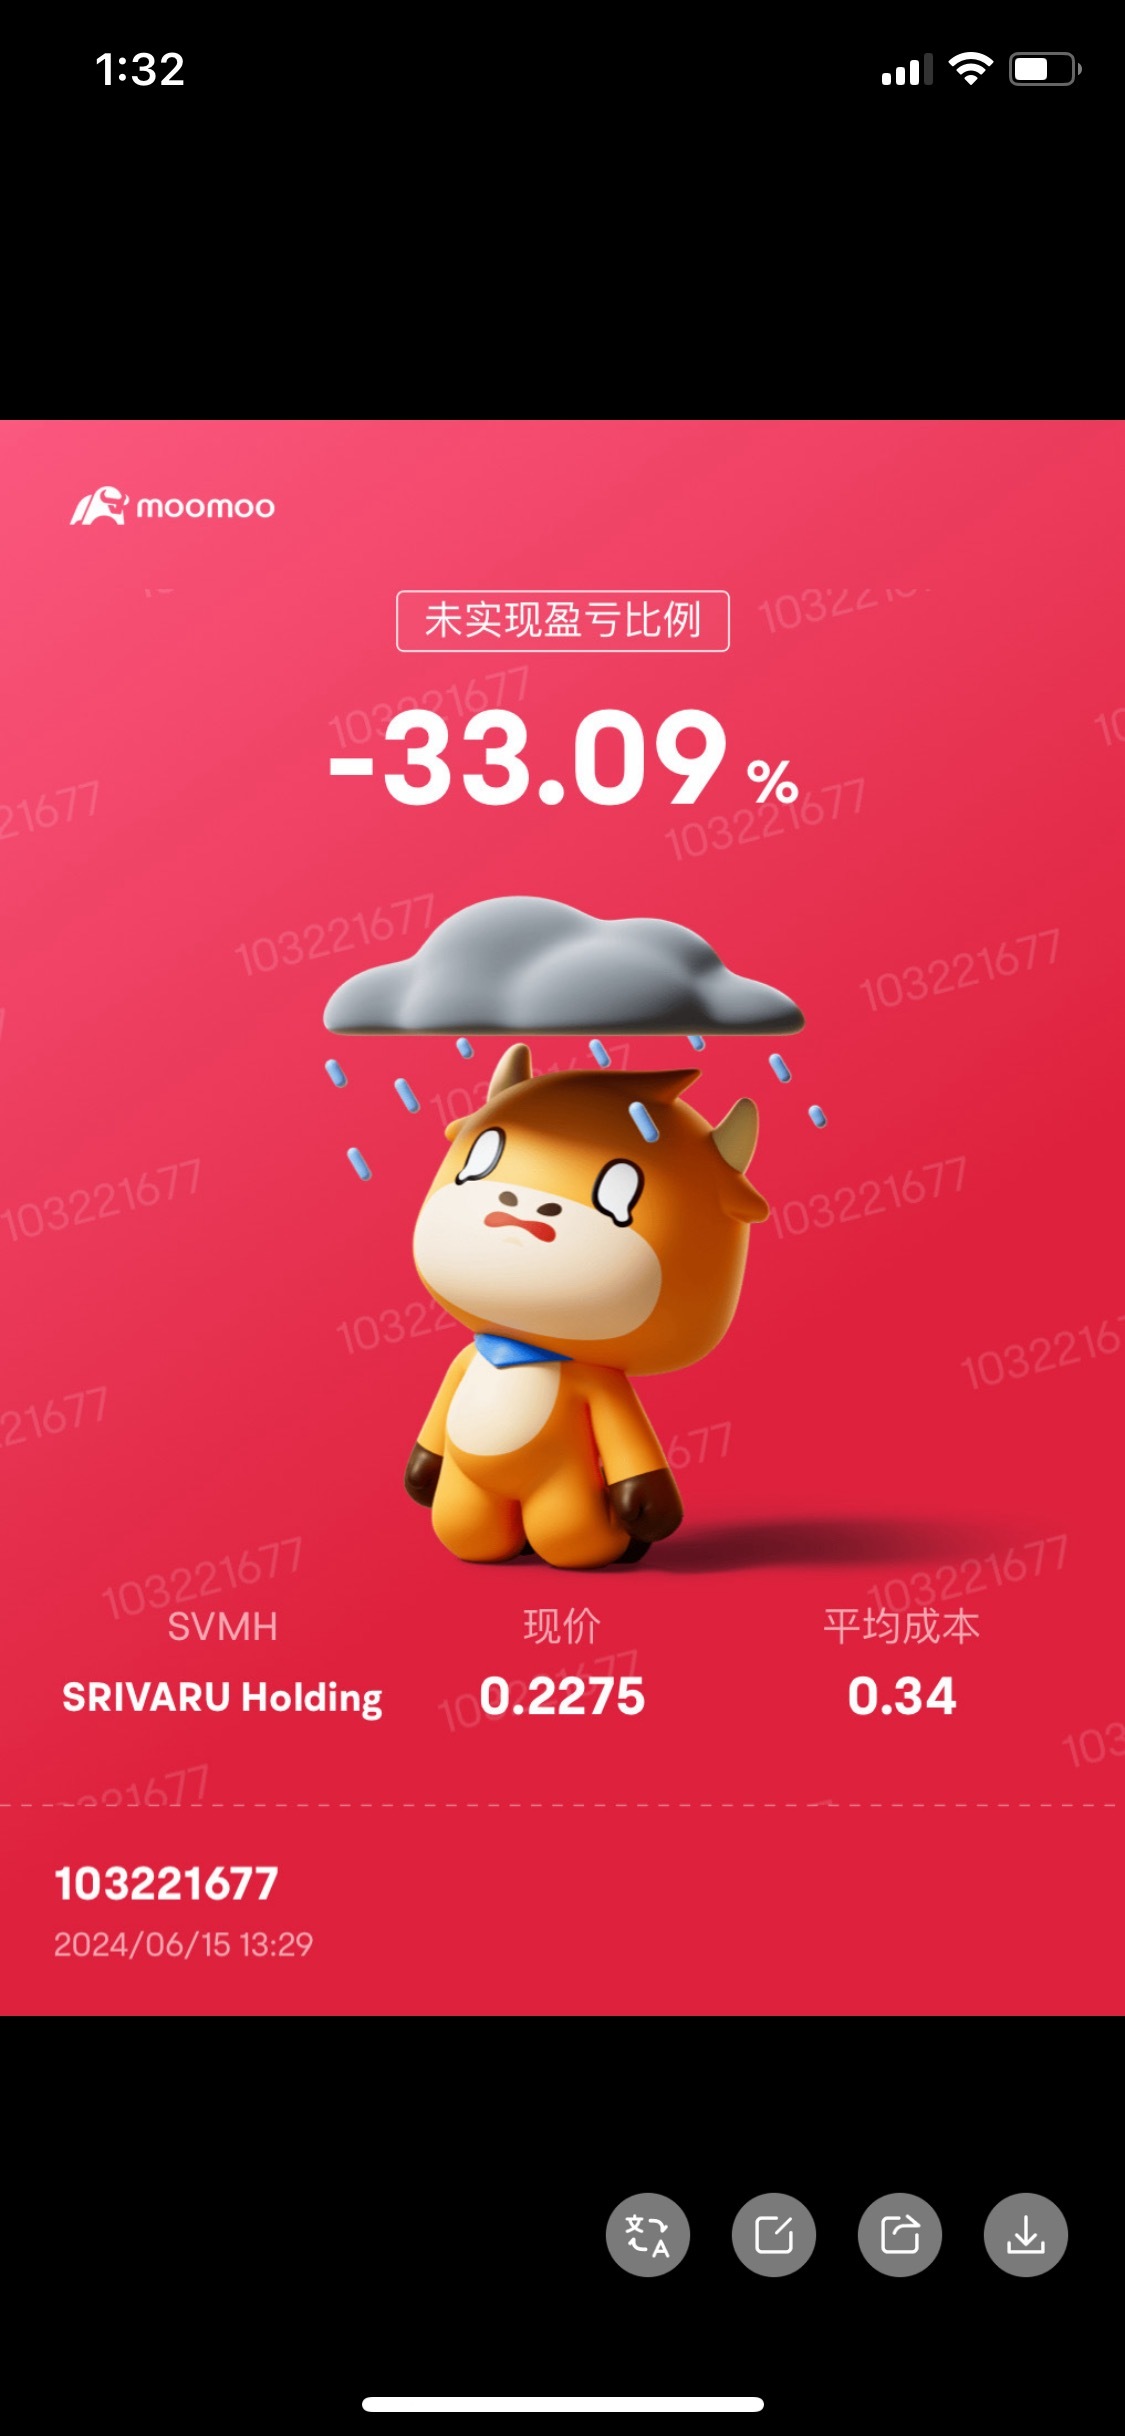 $SRIVARU Holding (SVMH.US)$ Terrible guy